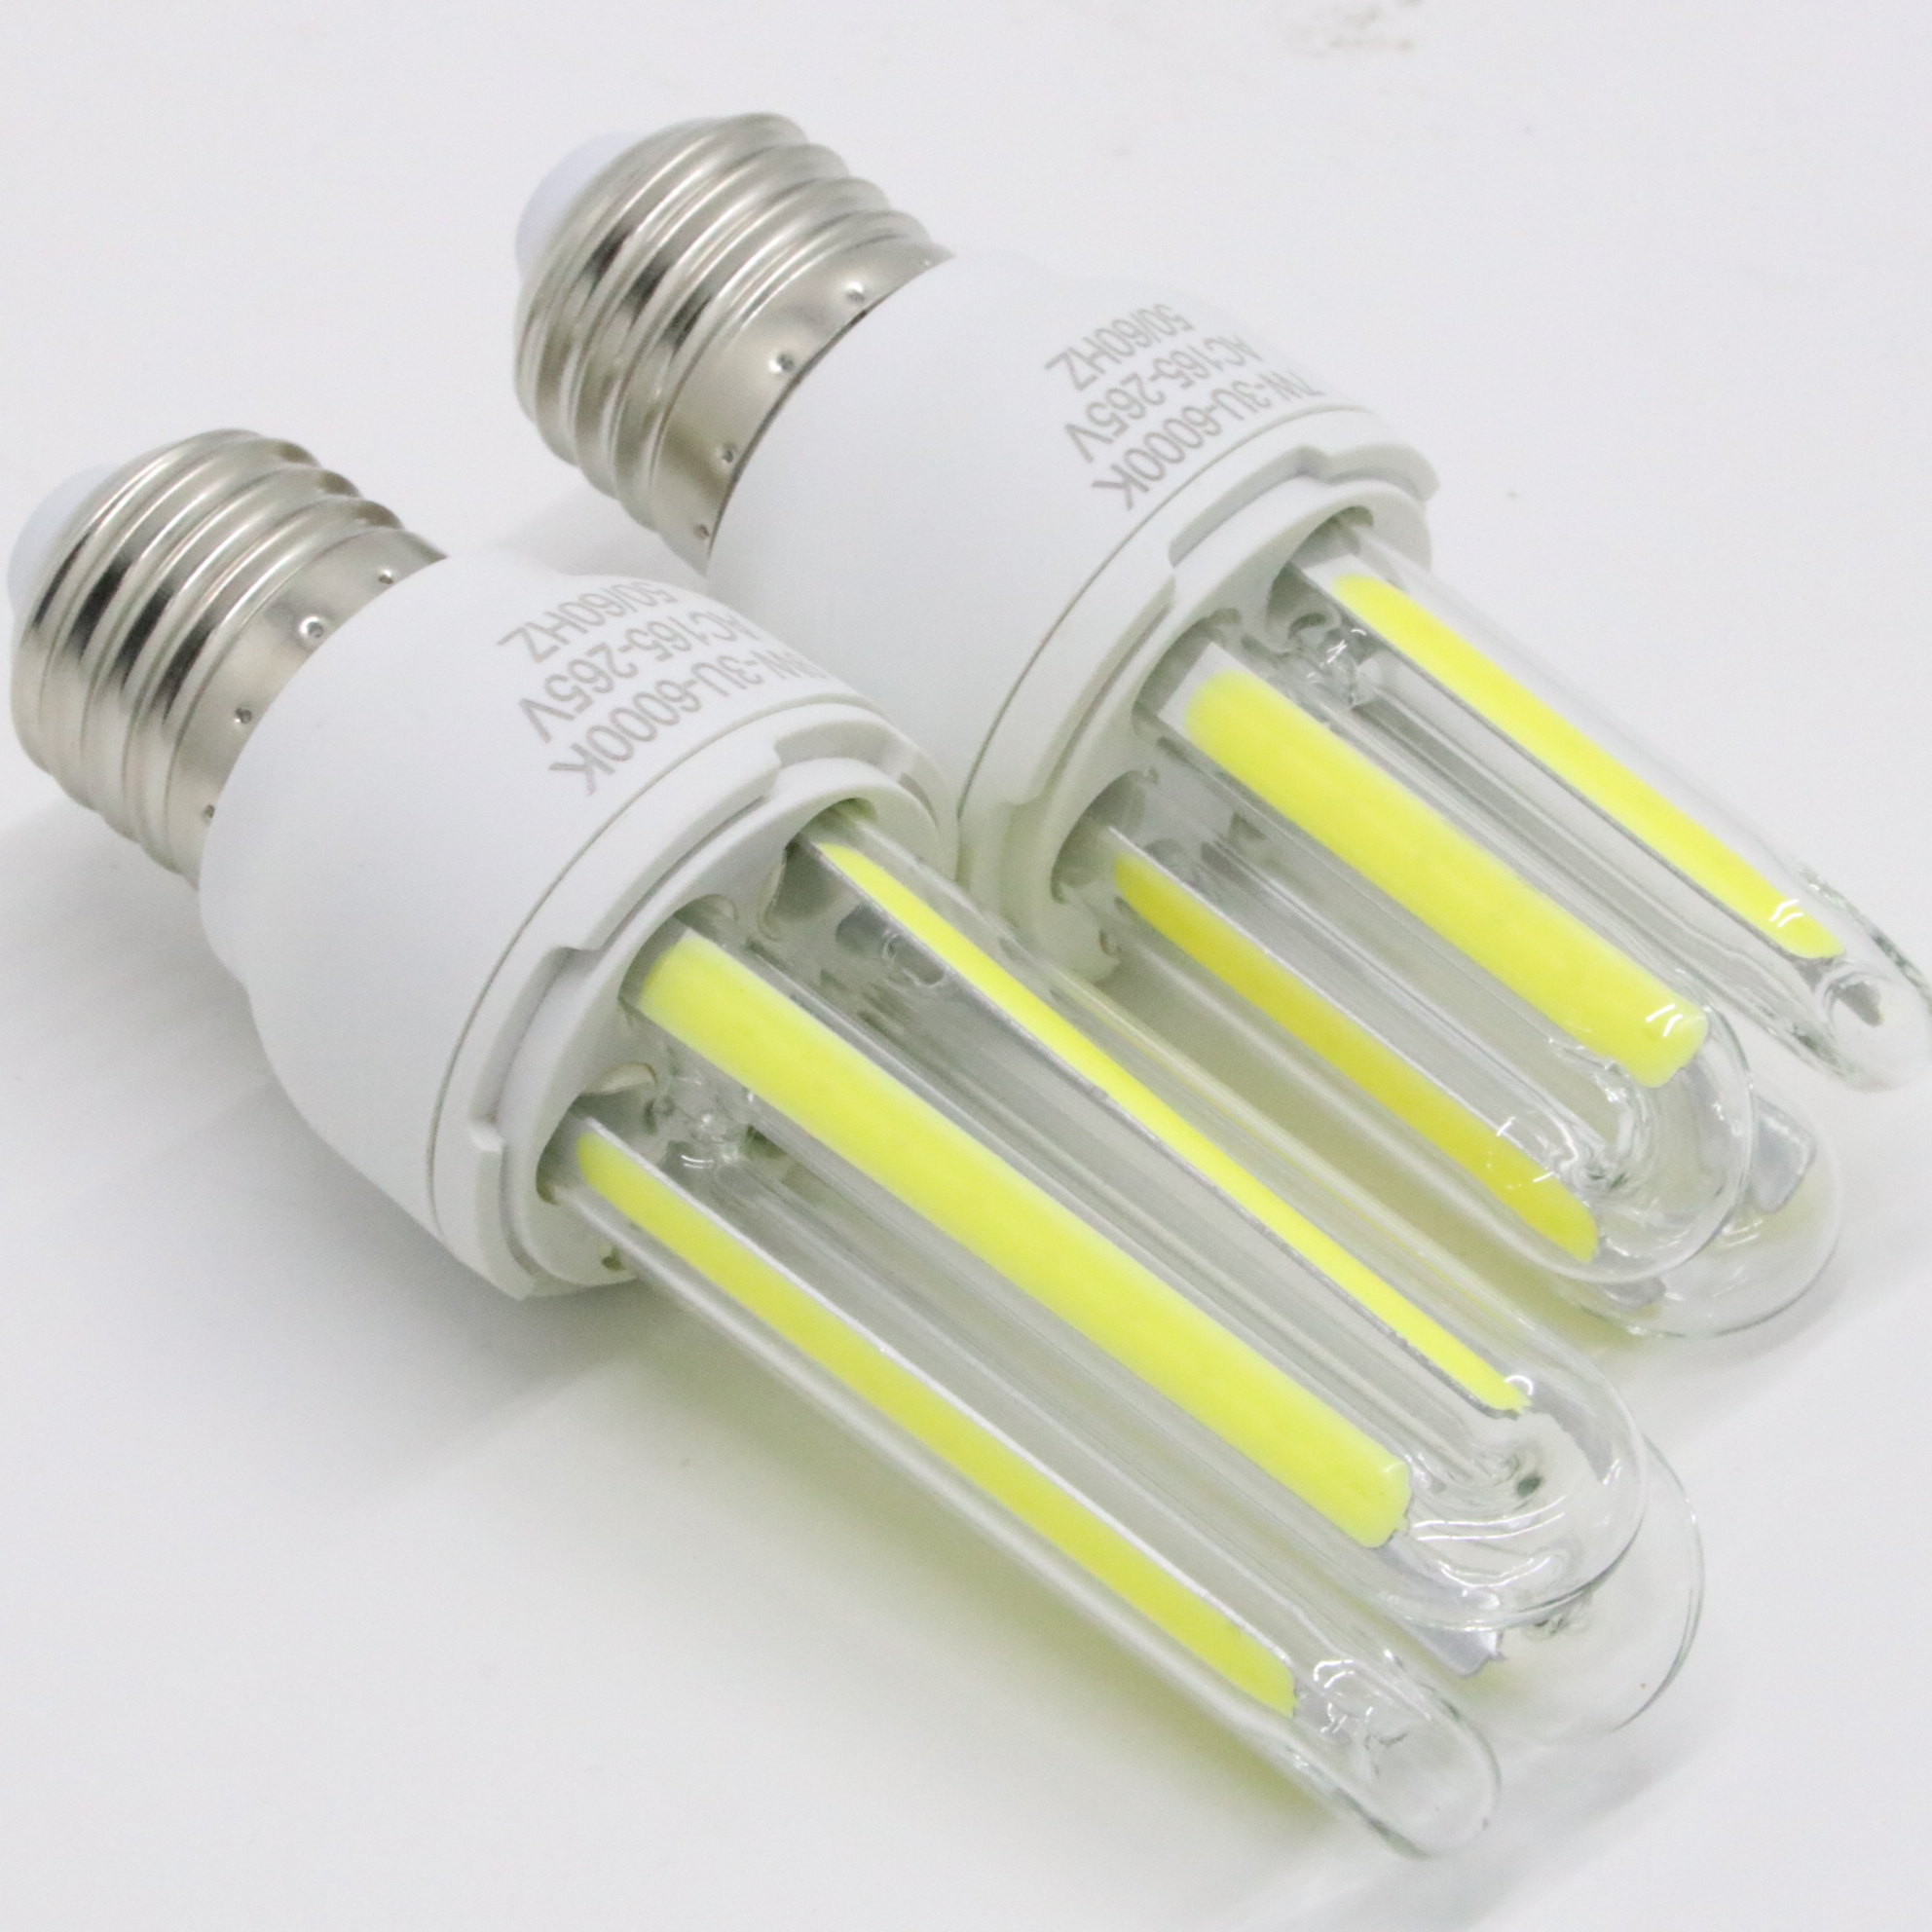 Add to CompareShare LED Light Bulb E27 7W 9W 12W 16W 20W U Style cob led Ultra Bright Energy Saving Lamp Bulb Pure Warm White